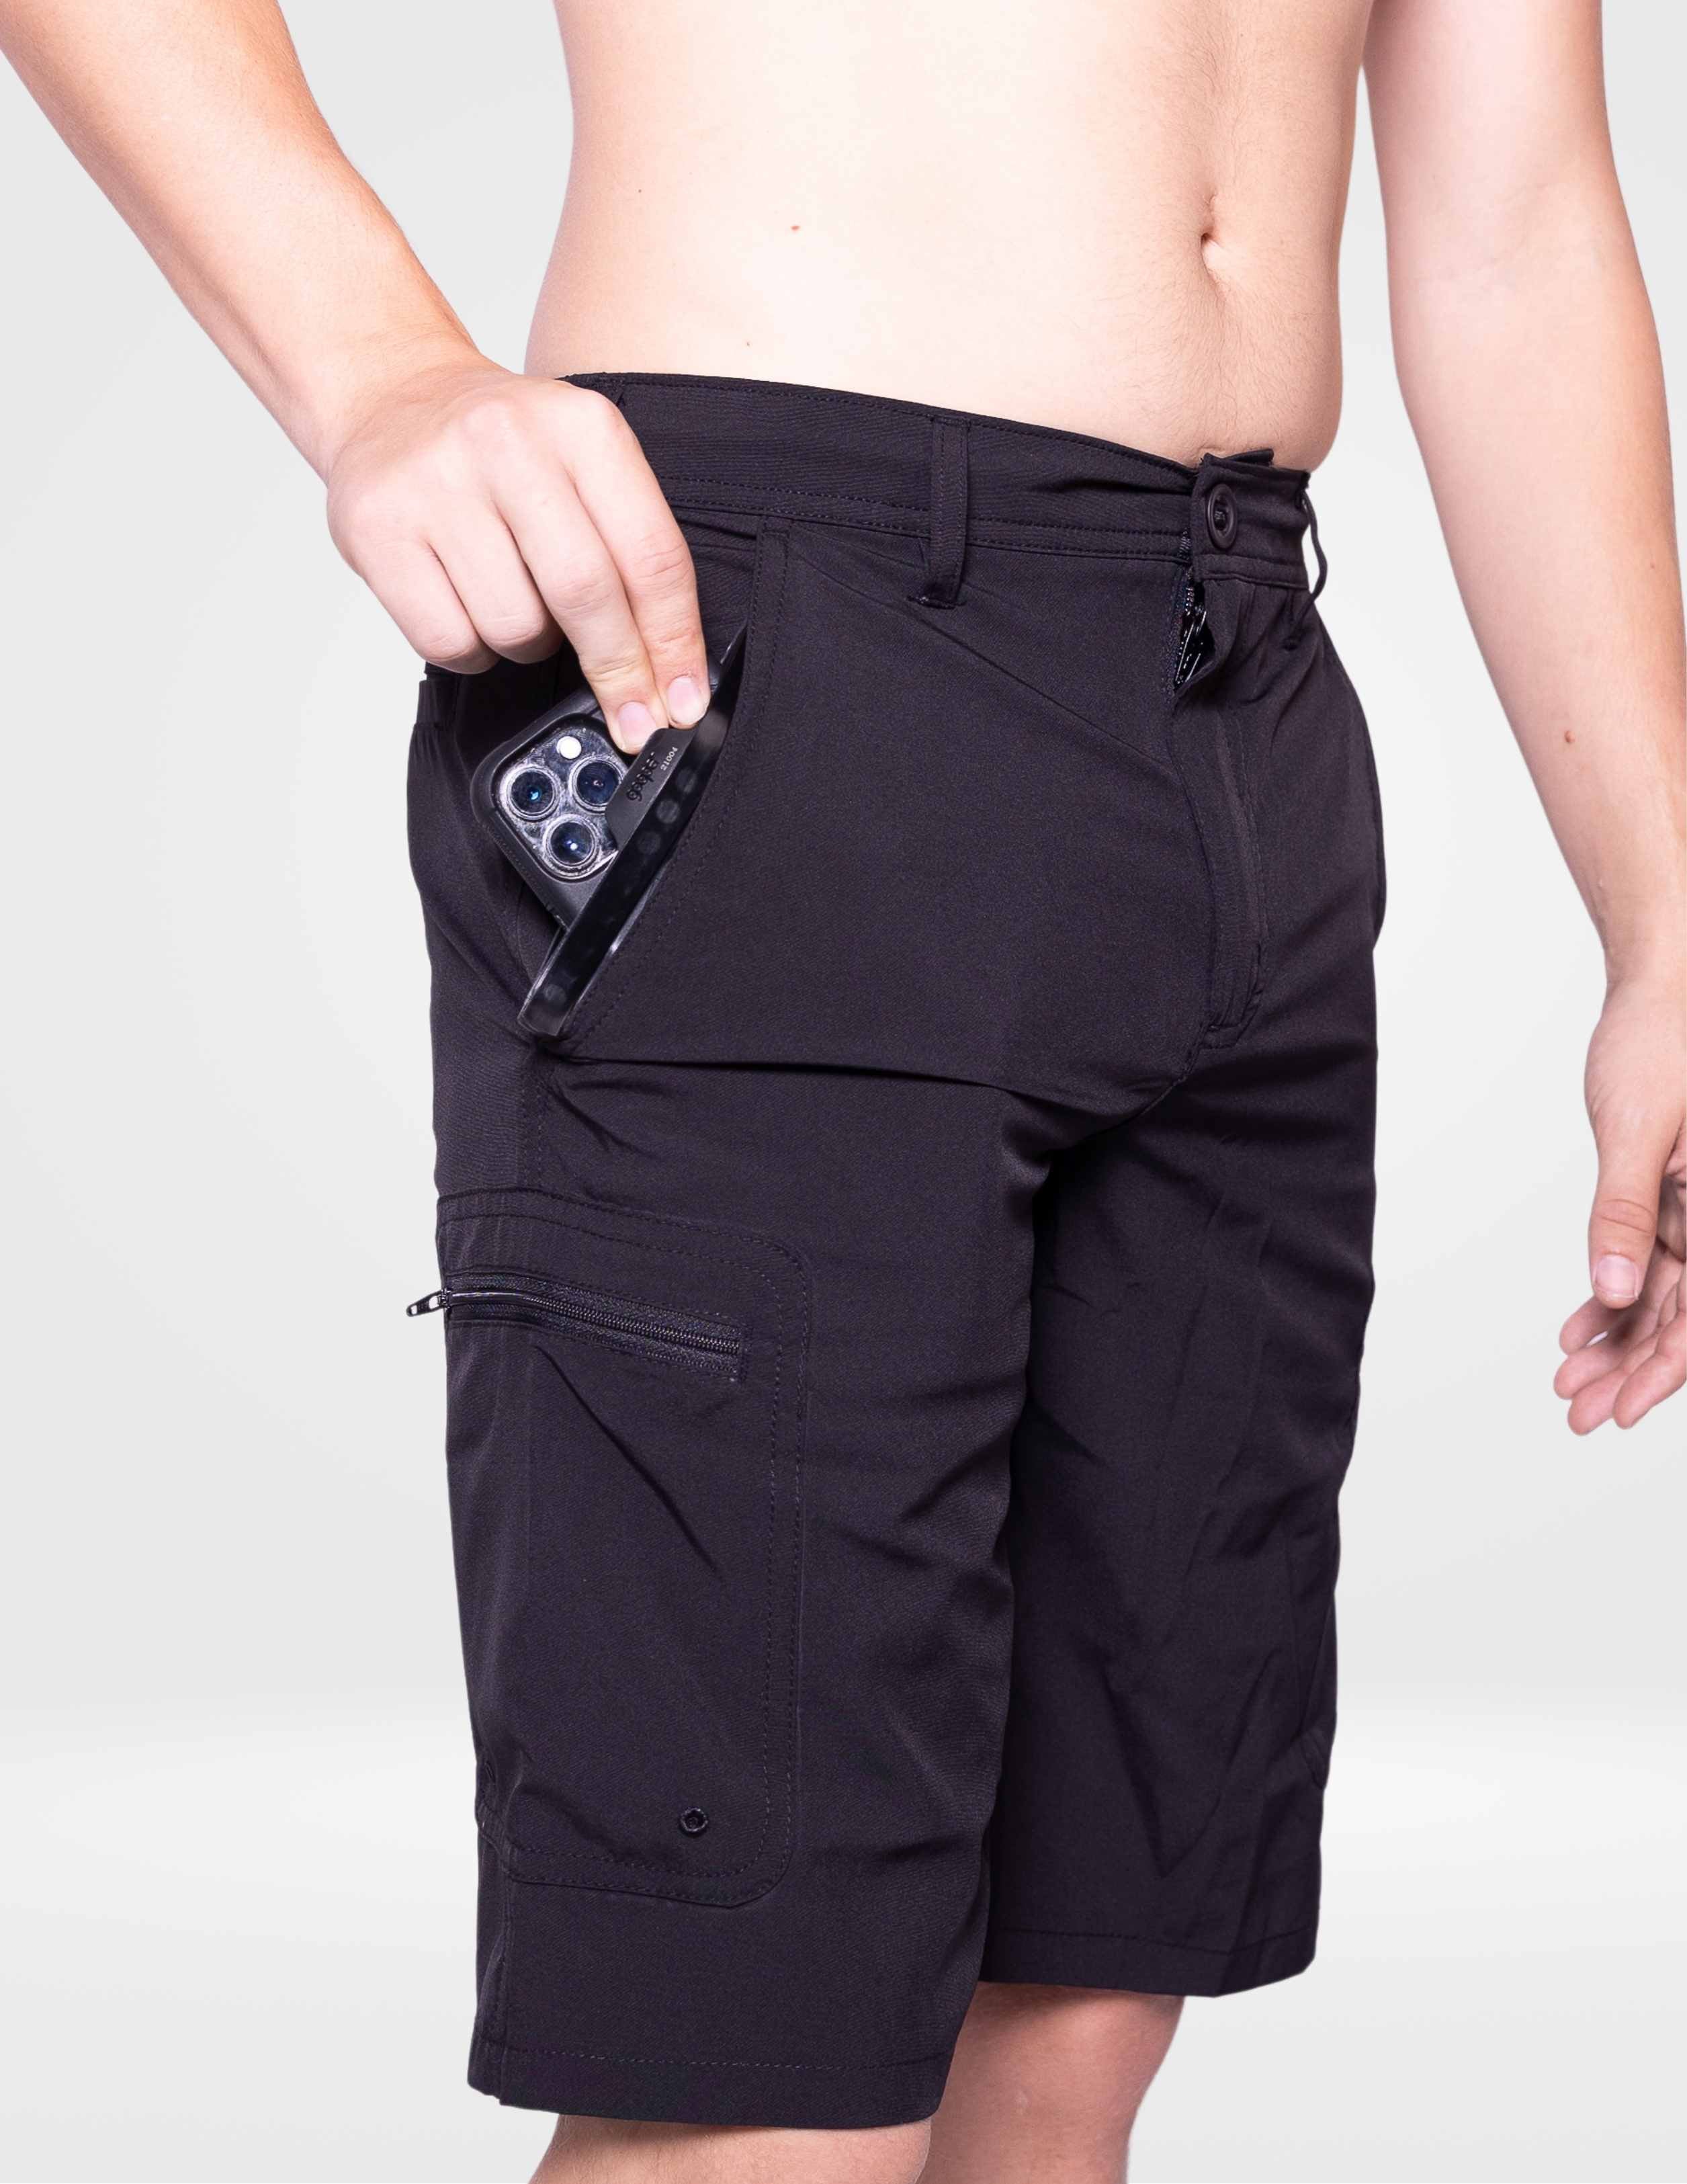 Waterproof Hybrid Shorts with Waterproof Pocket – Dry Pocket Apparel Small 30-33